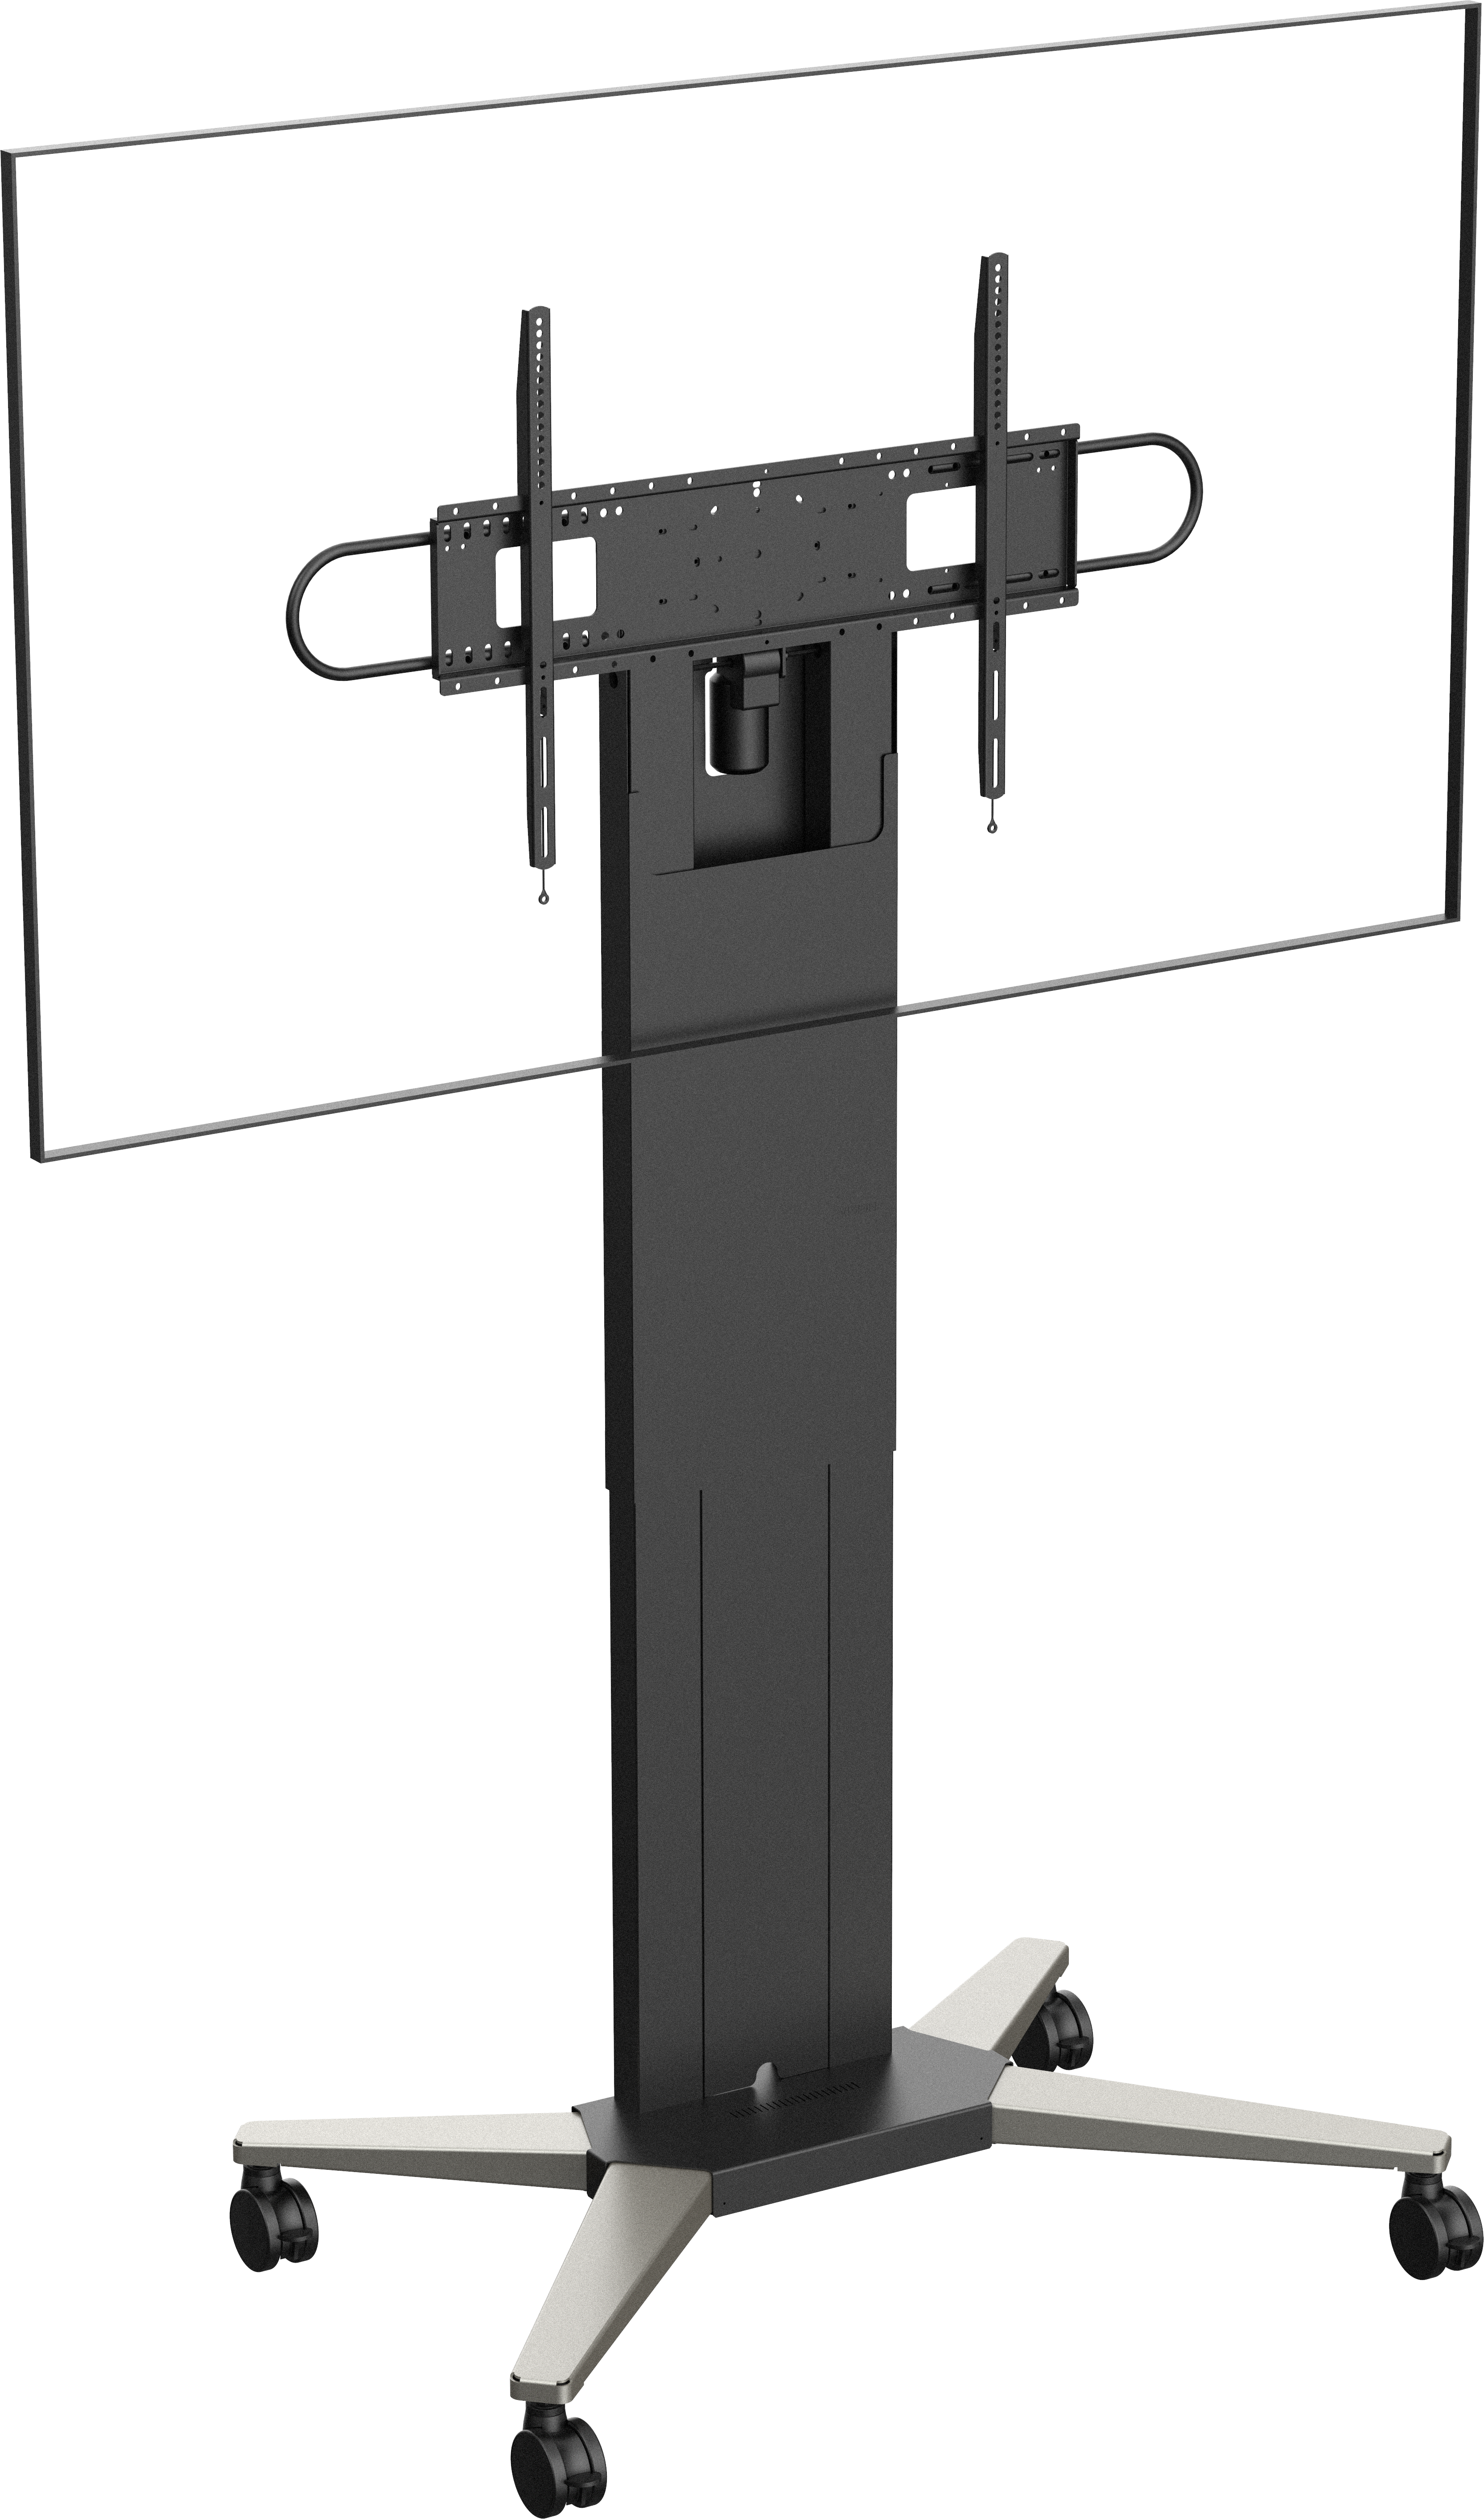 An image showing gemotoriseerde trolley voor flatscreens